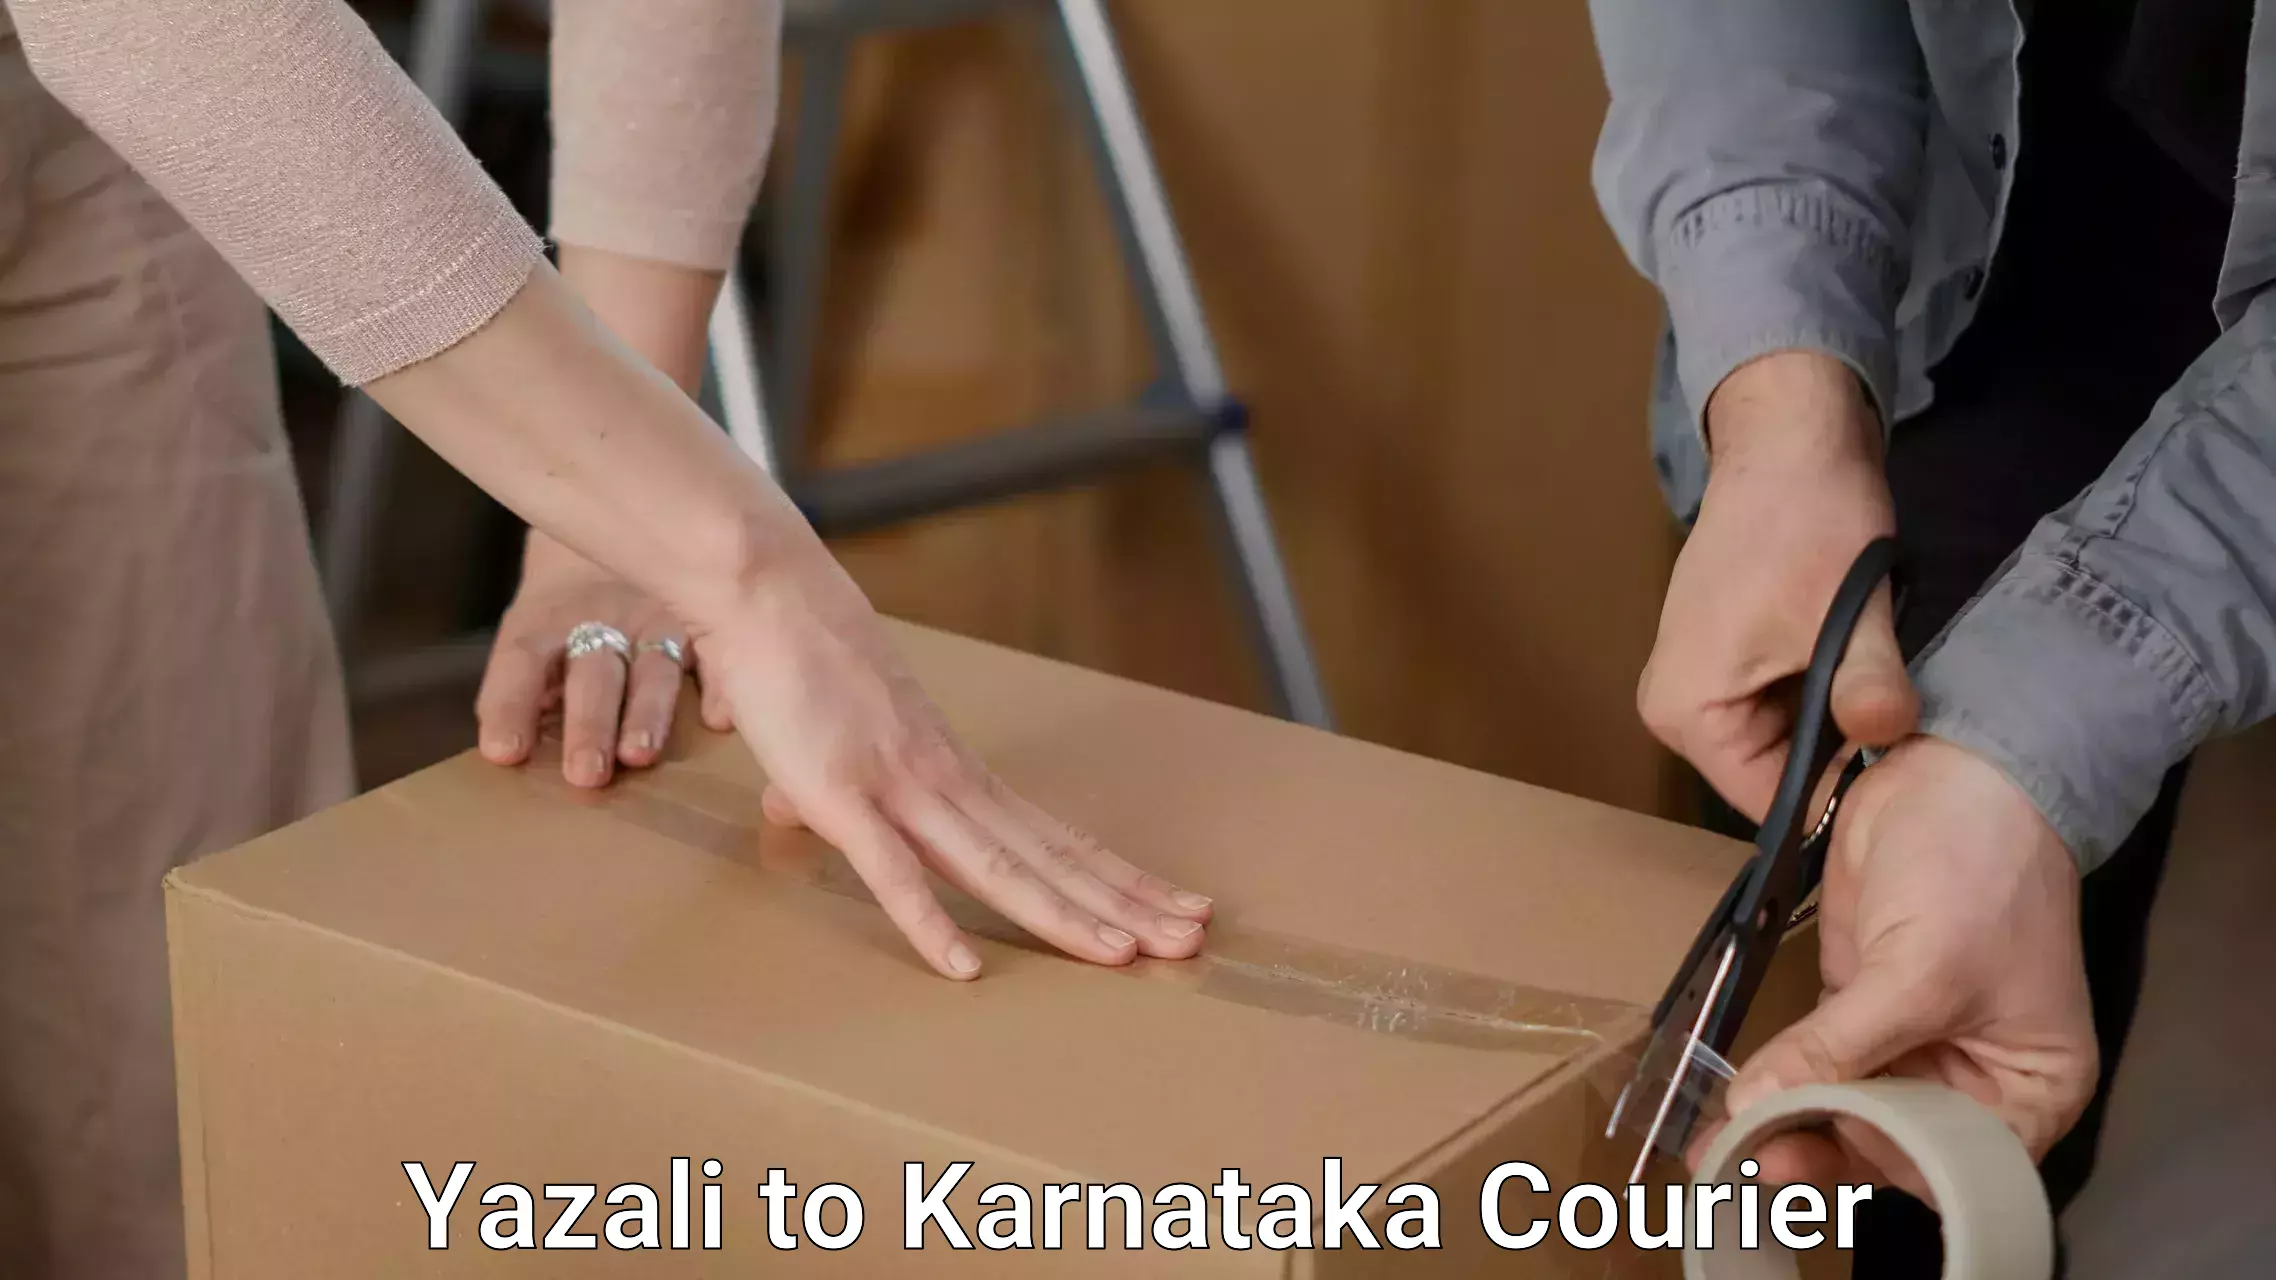 Furniture moving specialists Yazali to Karnataka